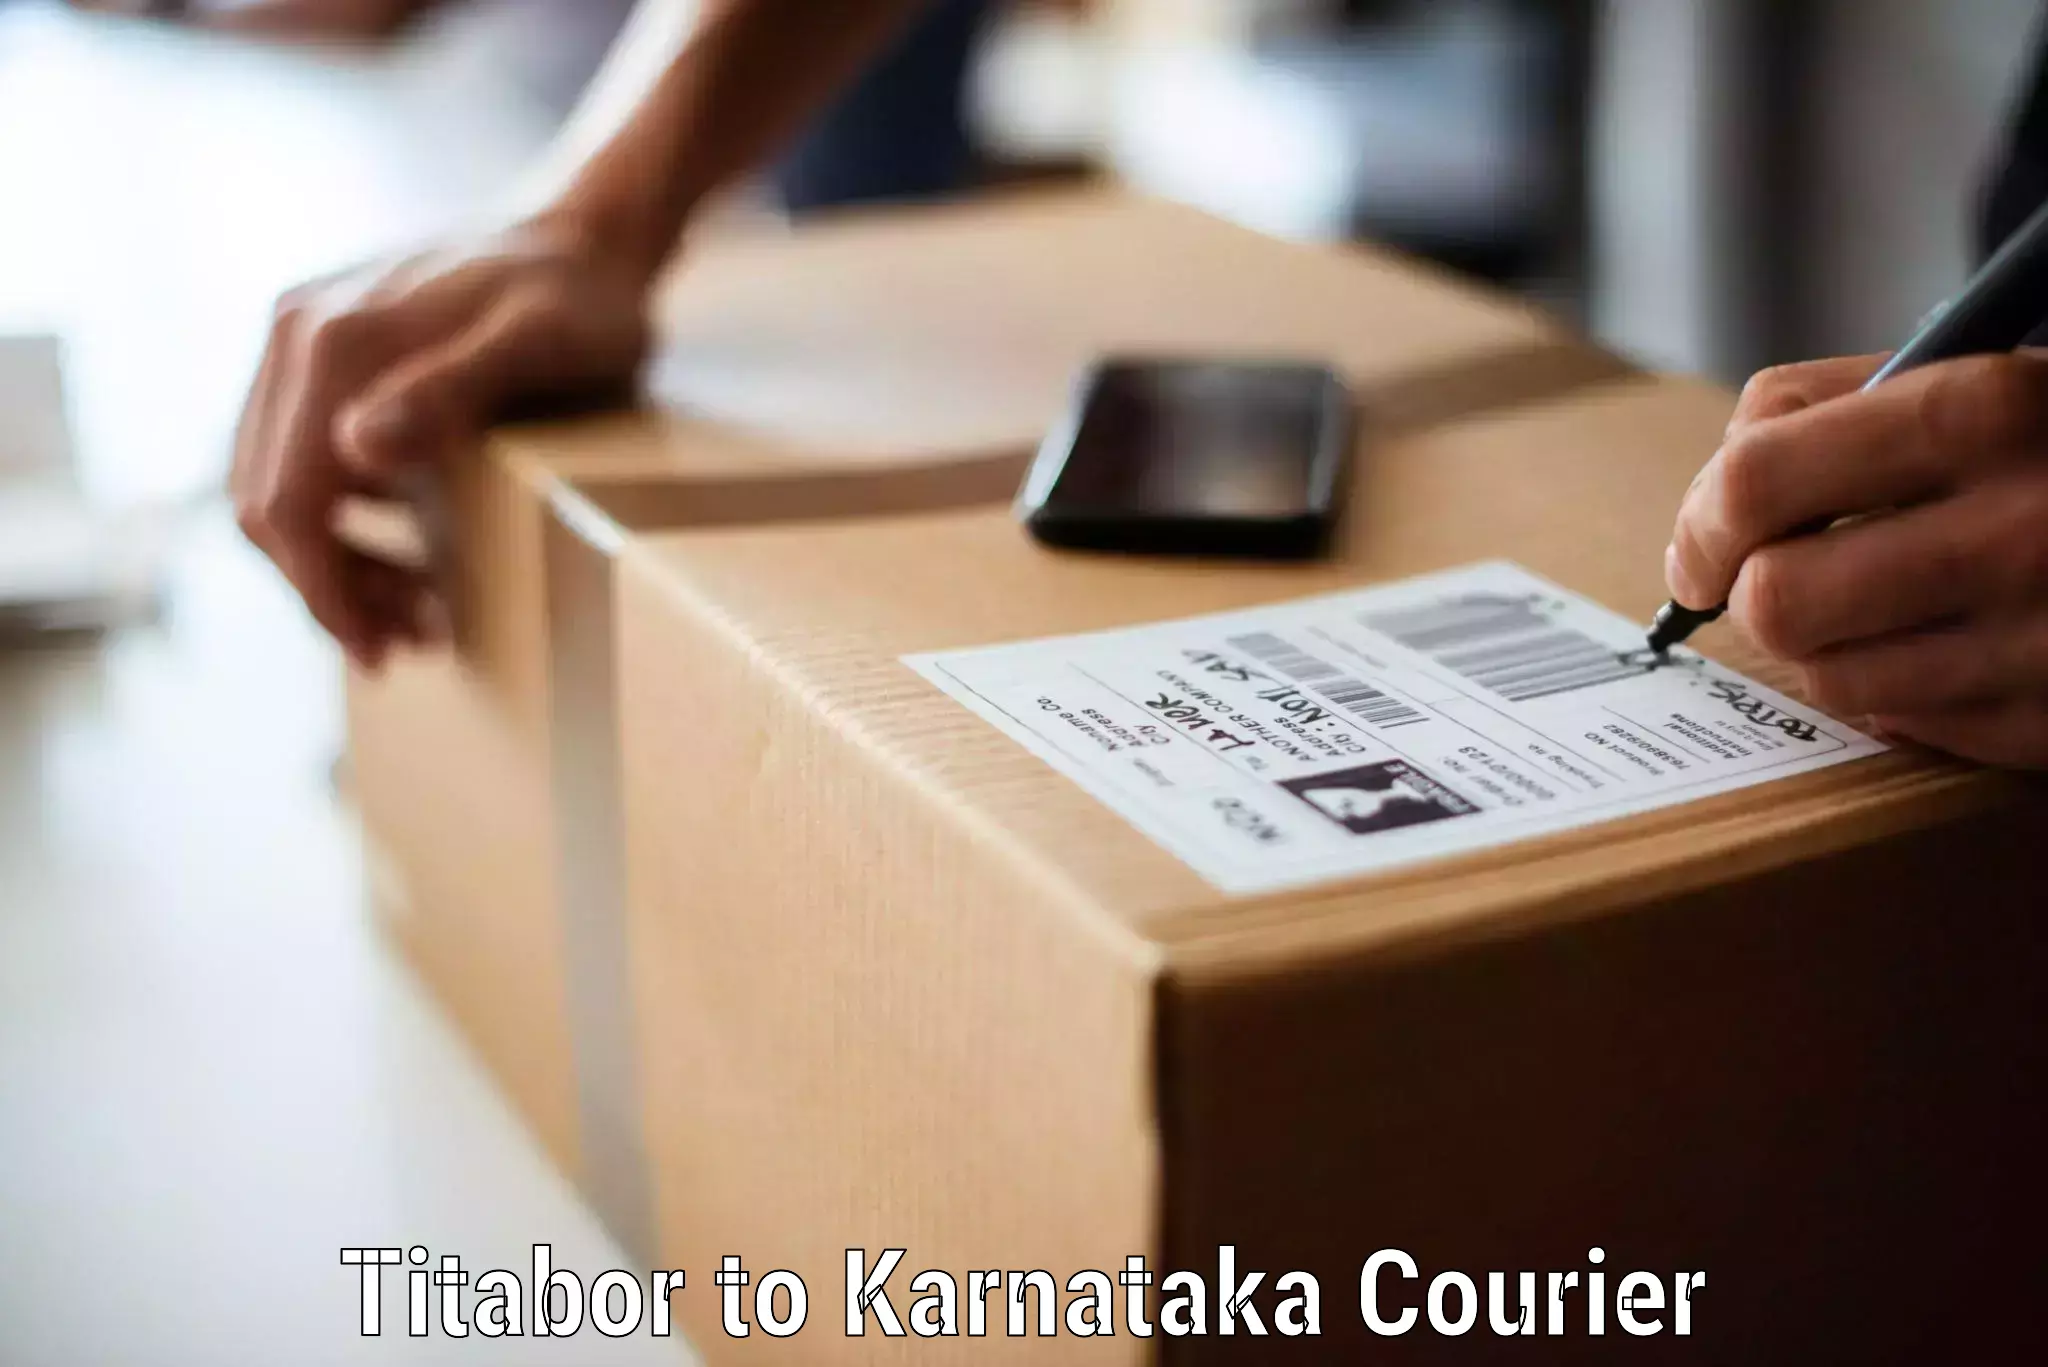 Moving and storage services Titabor to Karnataka